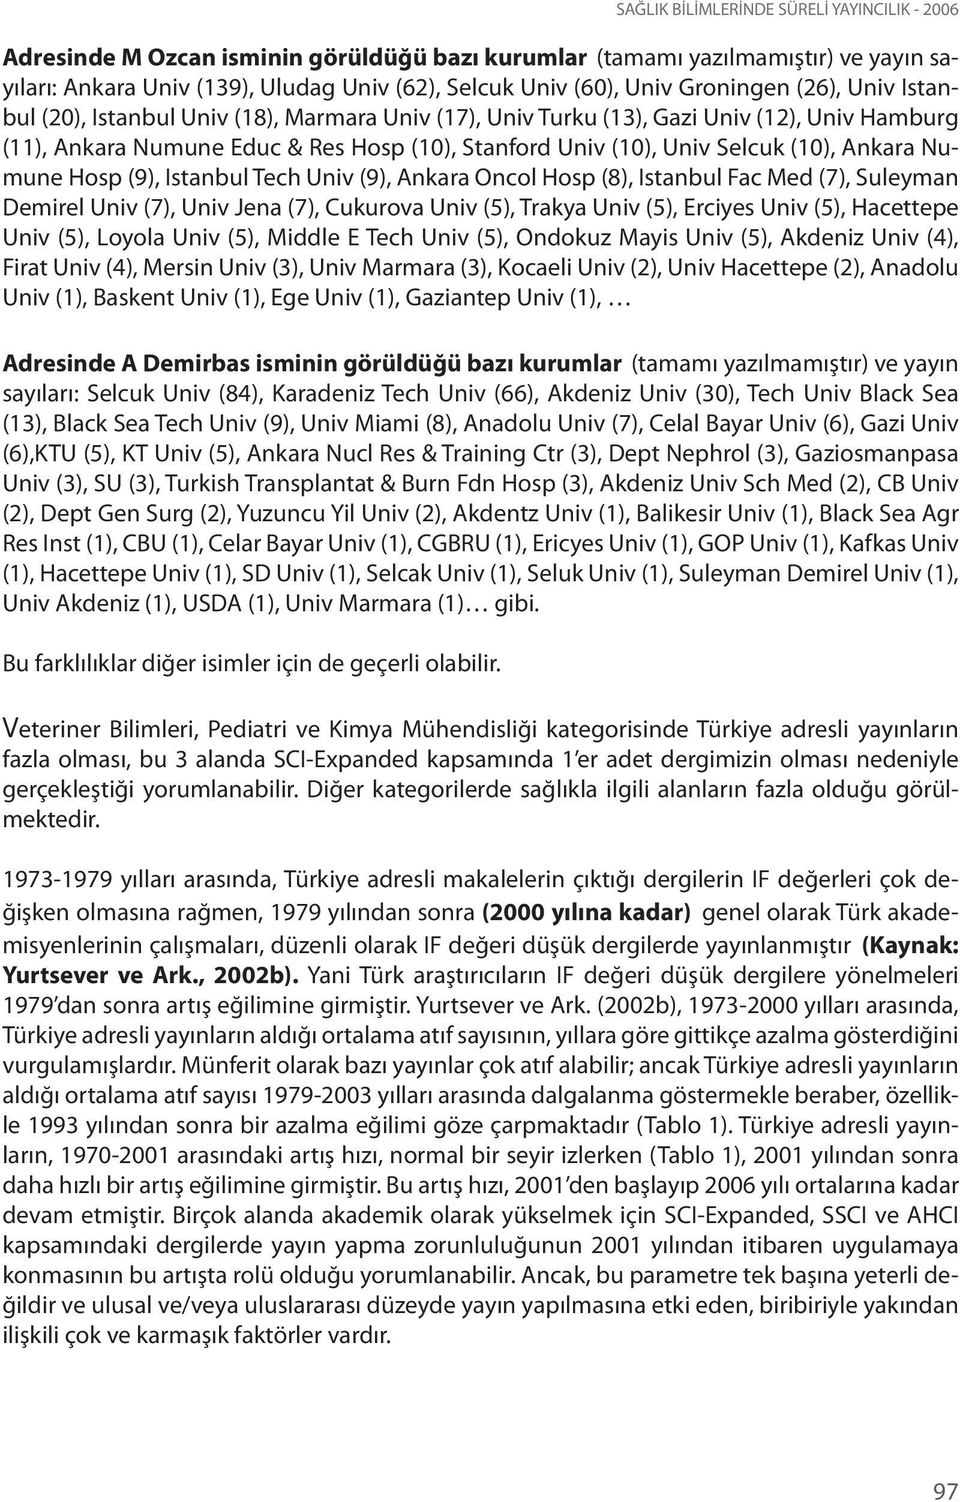 (10), Ankara Numune Hosp (9), Istanbul Tech Univ (9), Ankara Oncol Hosp (8), Istanbul Fac Med (7), Suleyman Demirel Univ (7), Univ Jena (7), Cukurova Univ (5), Trakya Univ (5), Erciyes Univ (5),